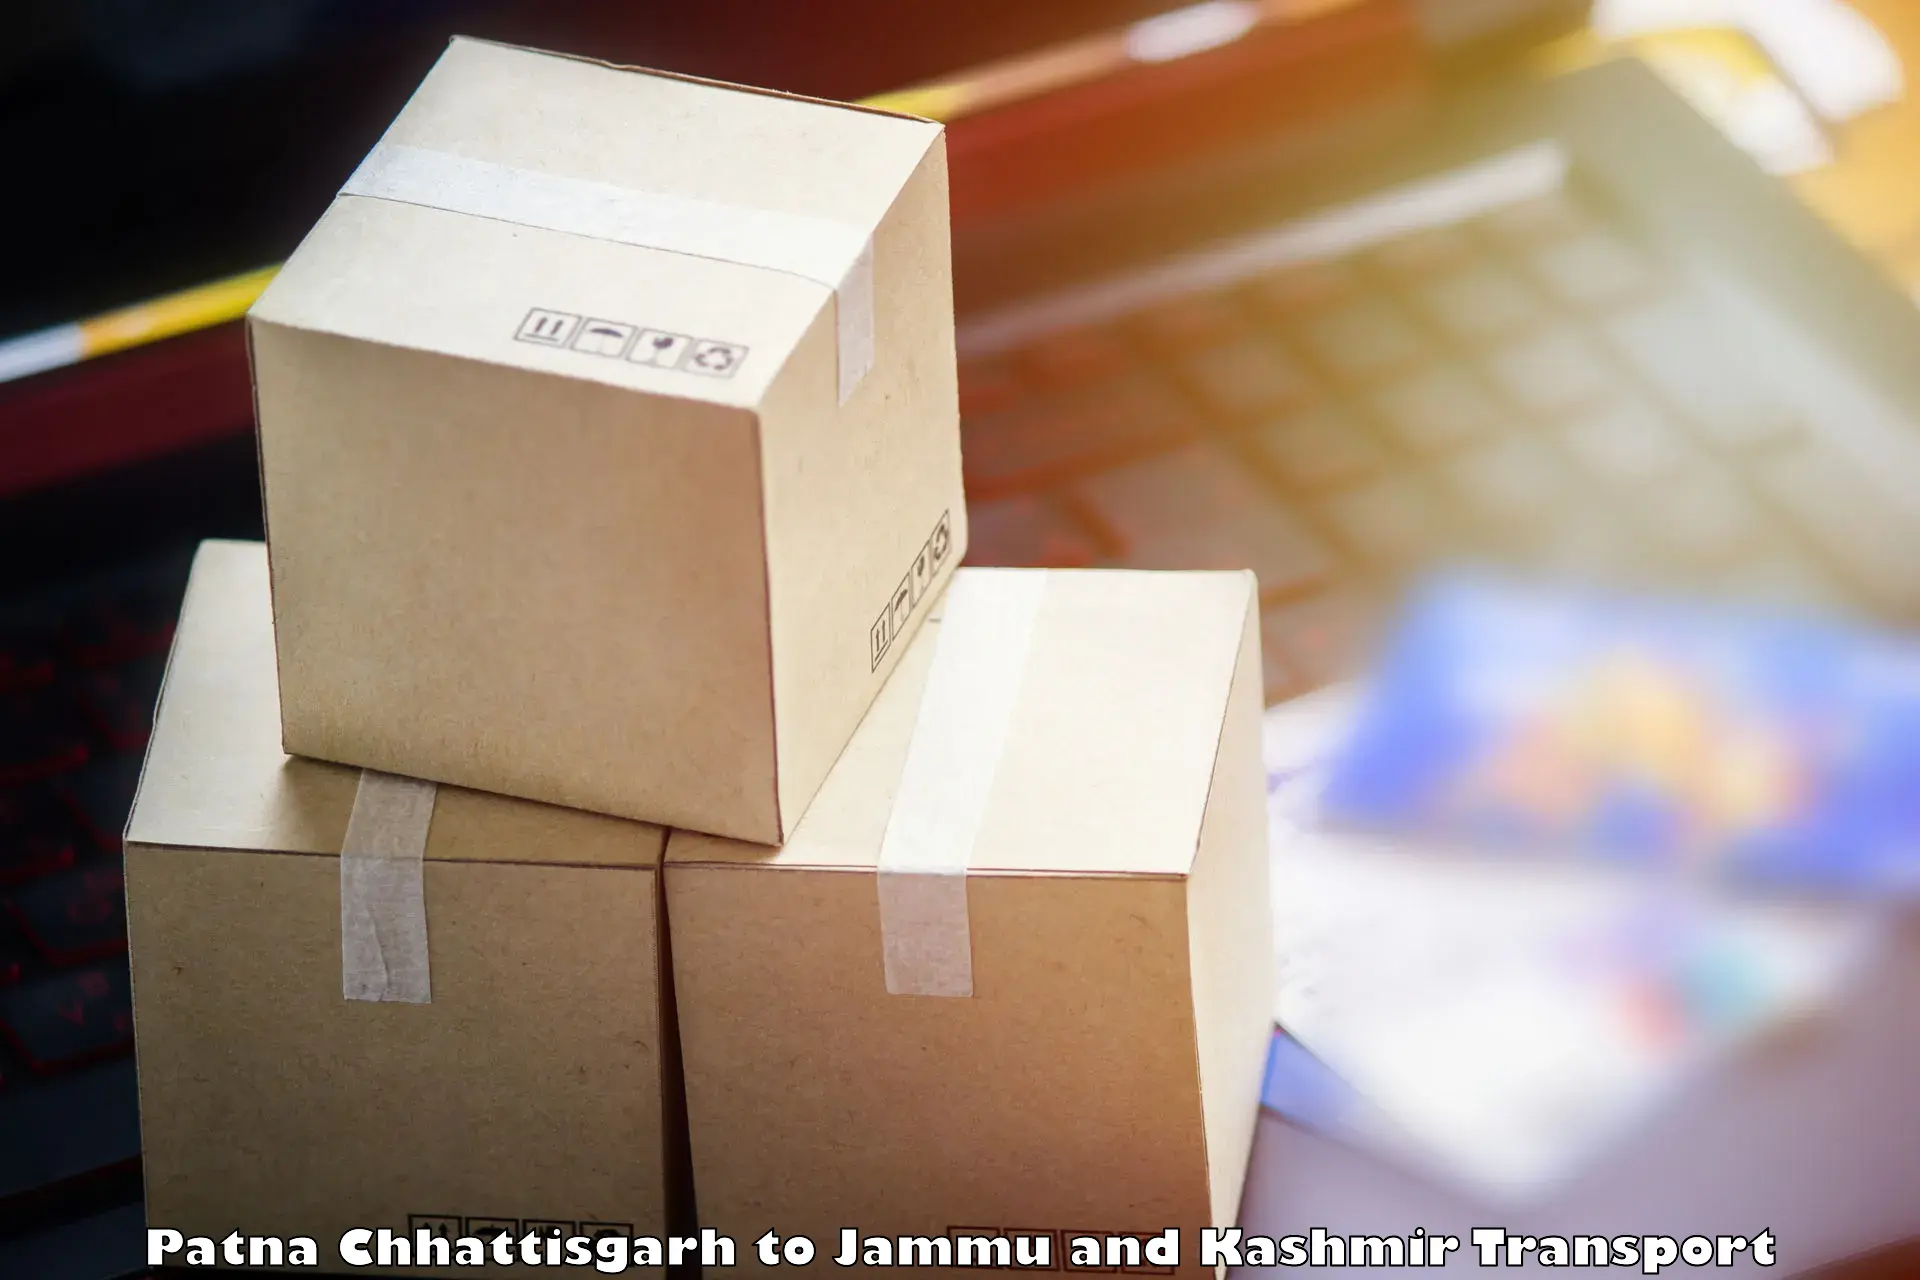 Shipping partner Patna Chhattisgarh to Kishtwar